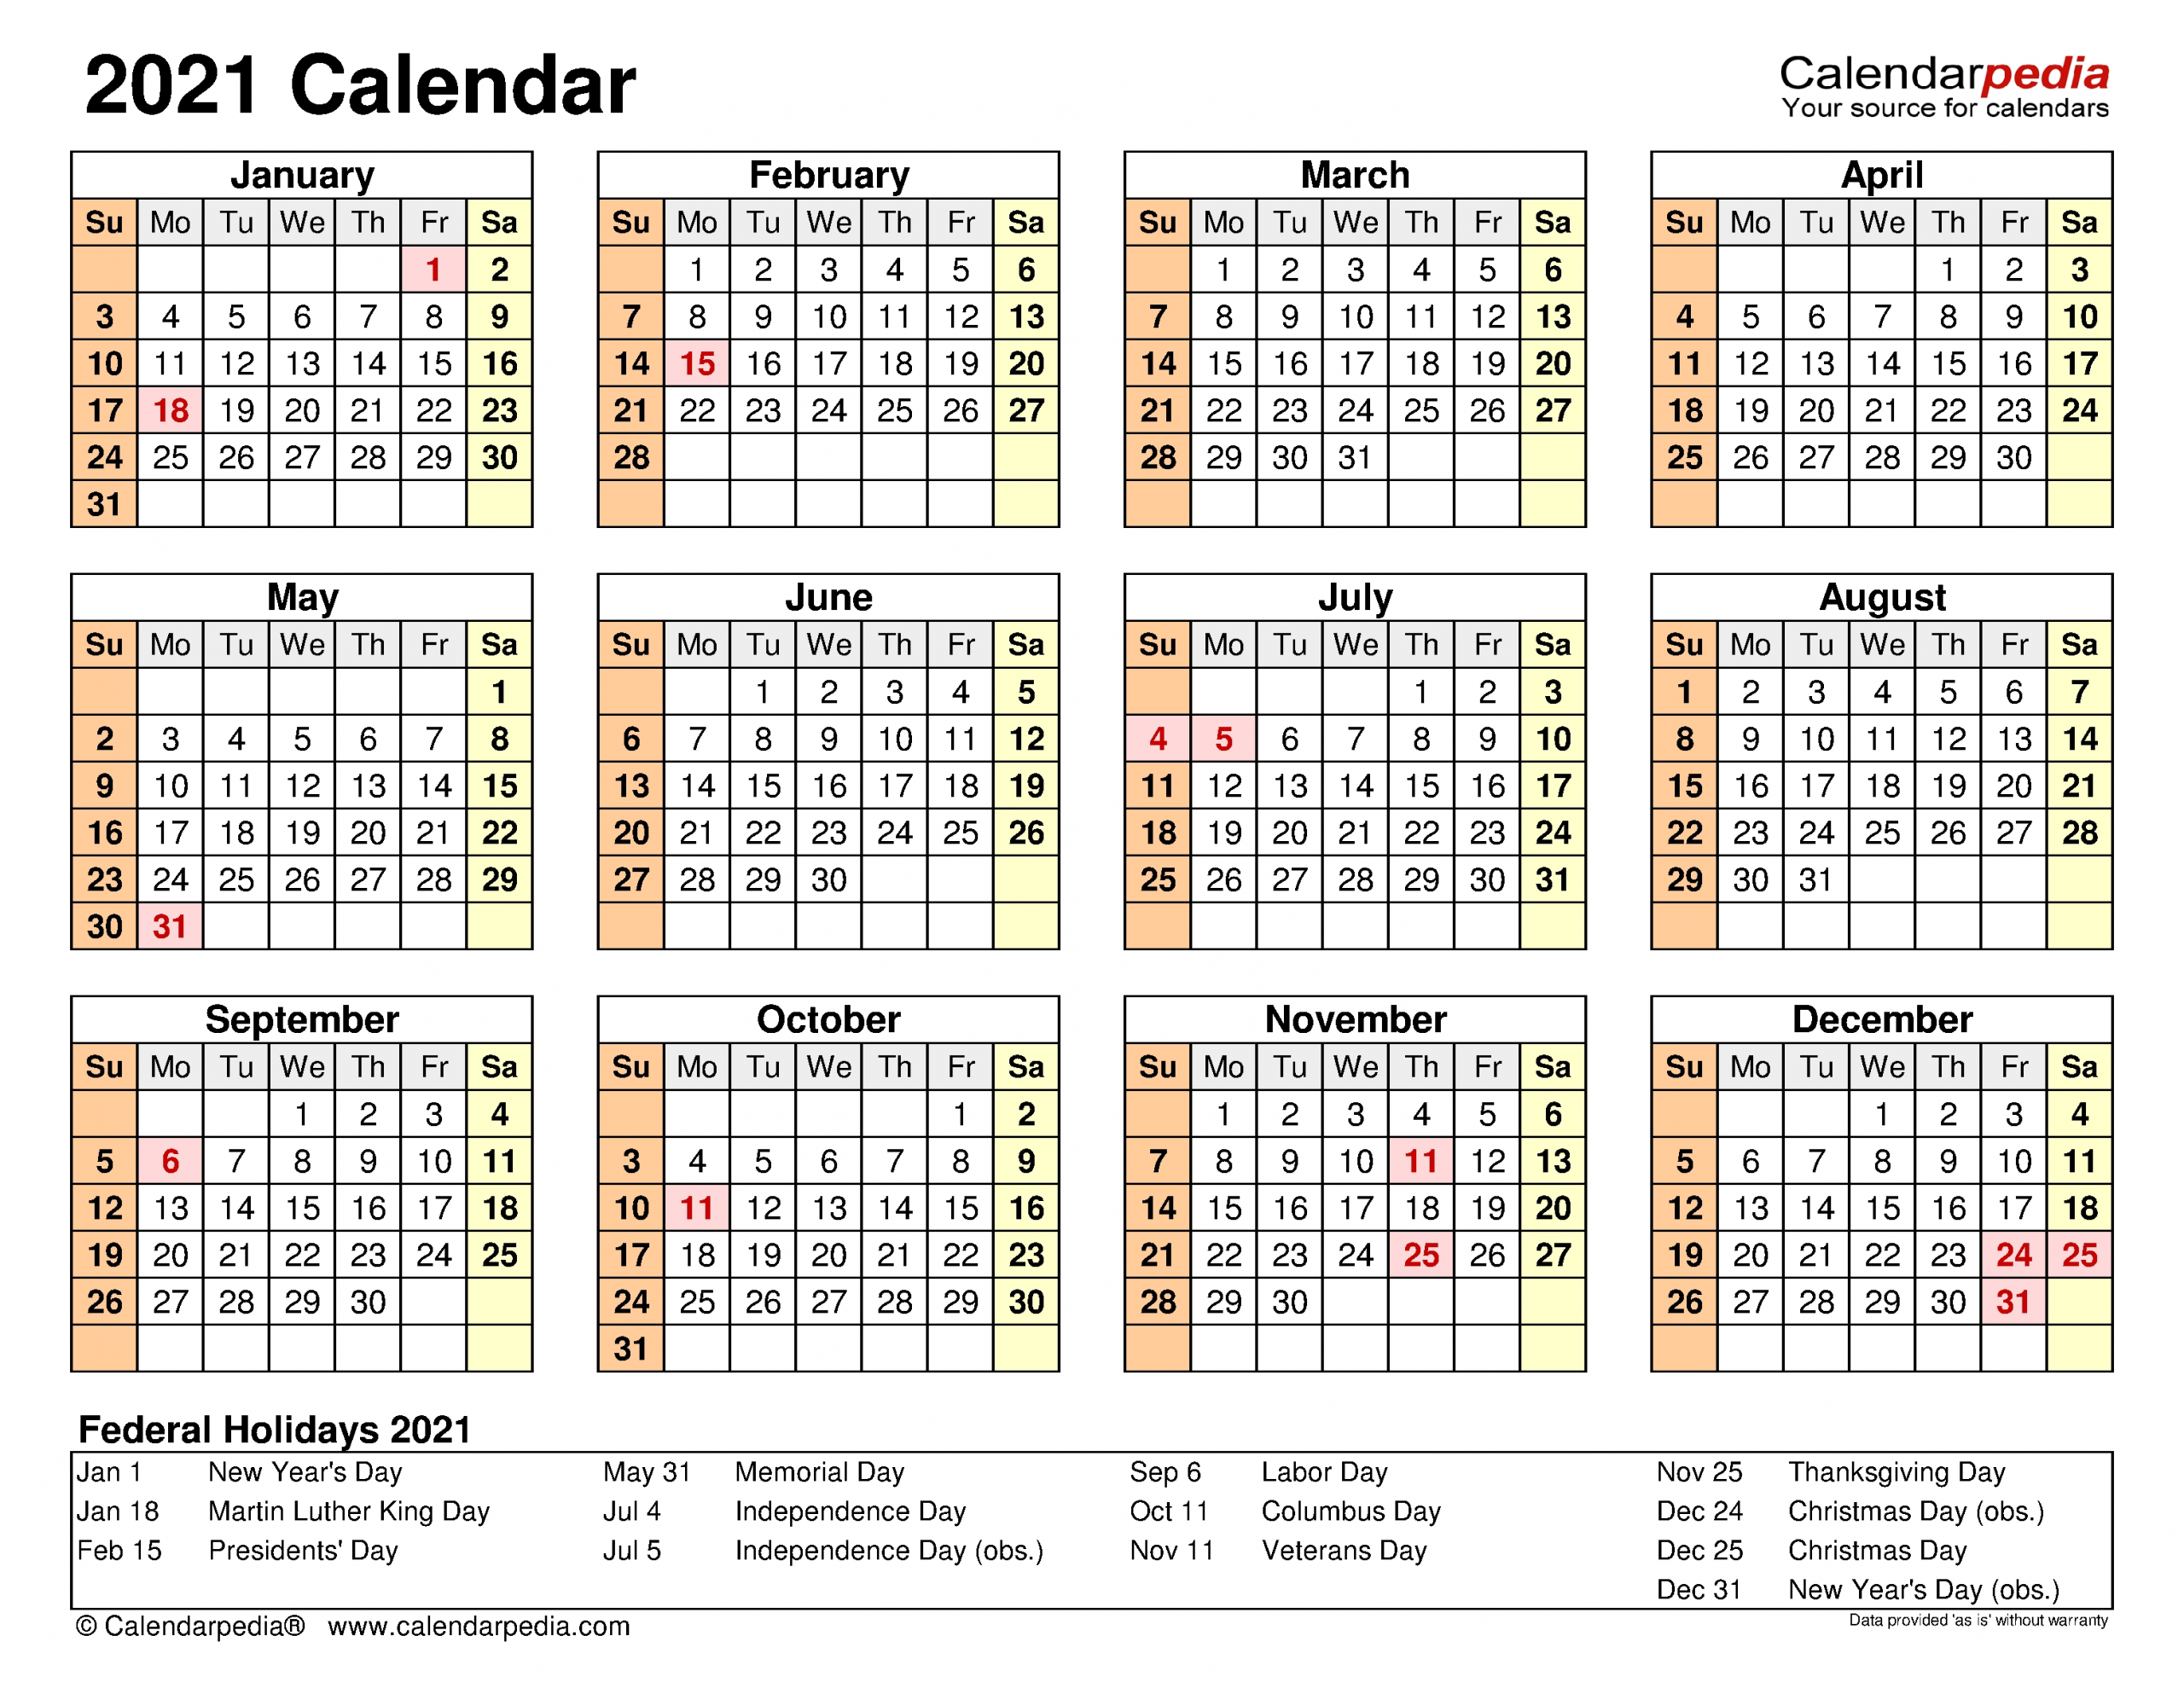 2021 Calendar - Free Printable Excel Templates - Calendarpedia-Microsoft Calendar 2021 Excel